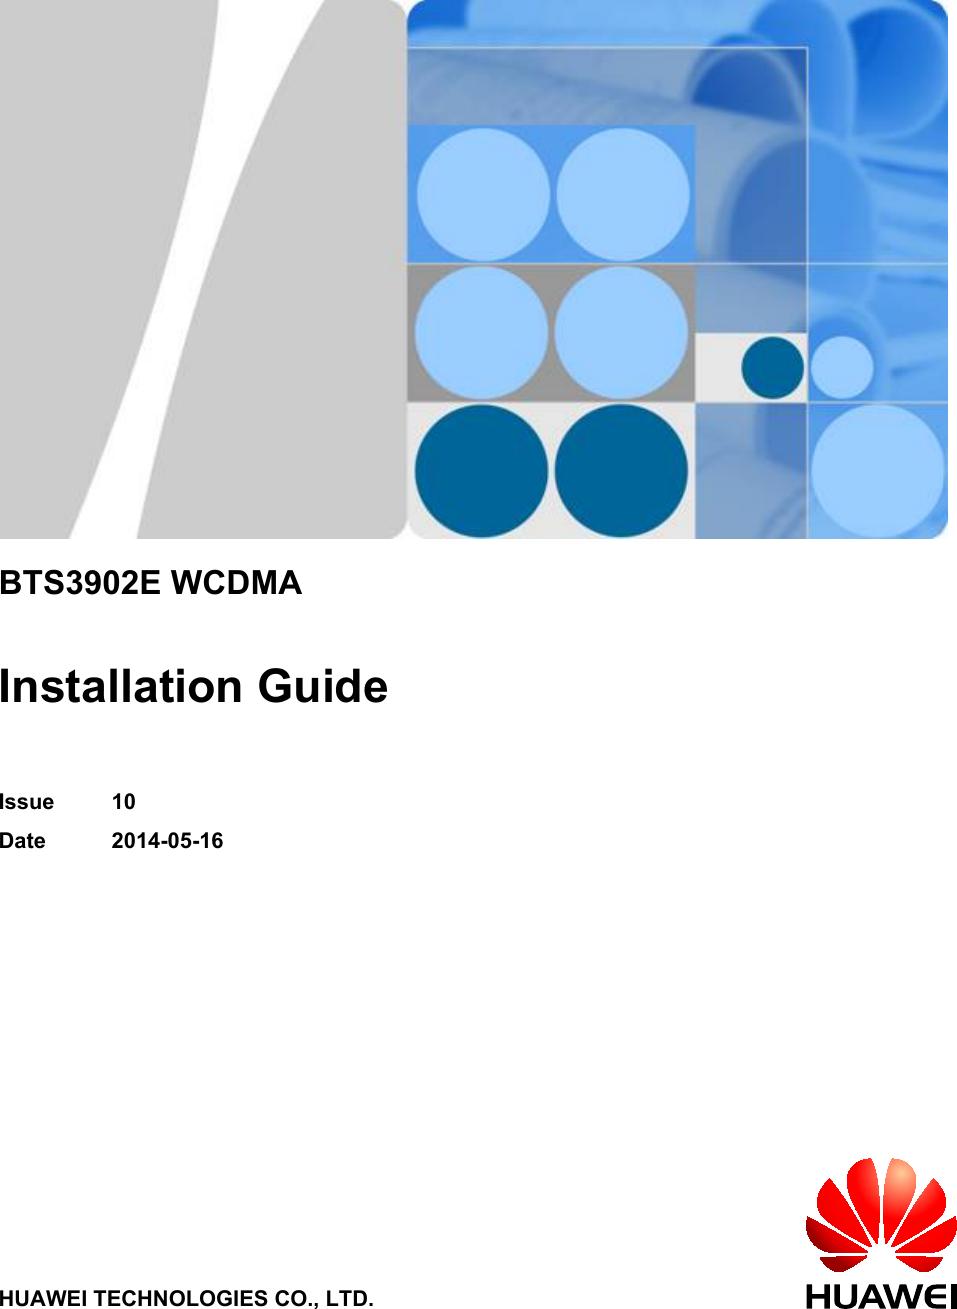 BTS3902E WCDMAInstallation GuideIssue 10Date 2014-05-16HUAWEI TECHNOLOGIES CO., LTD.